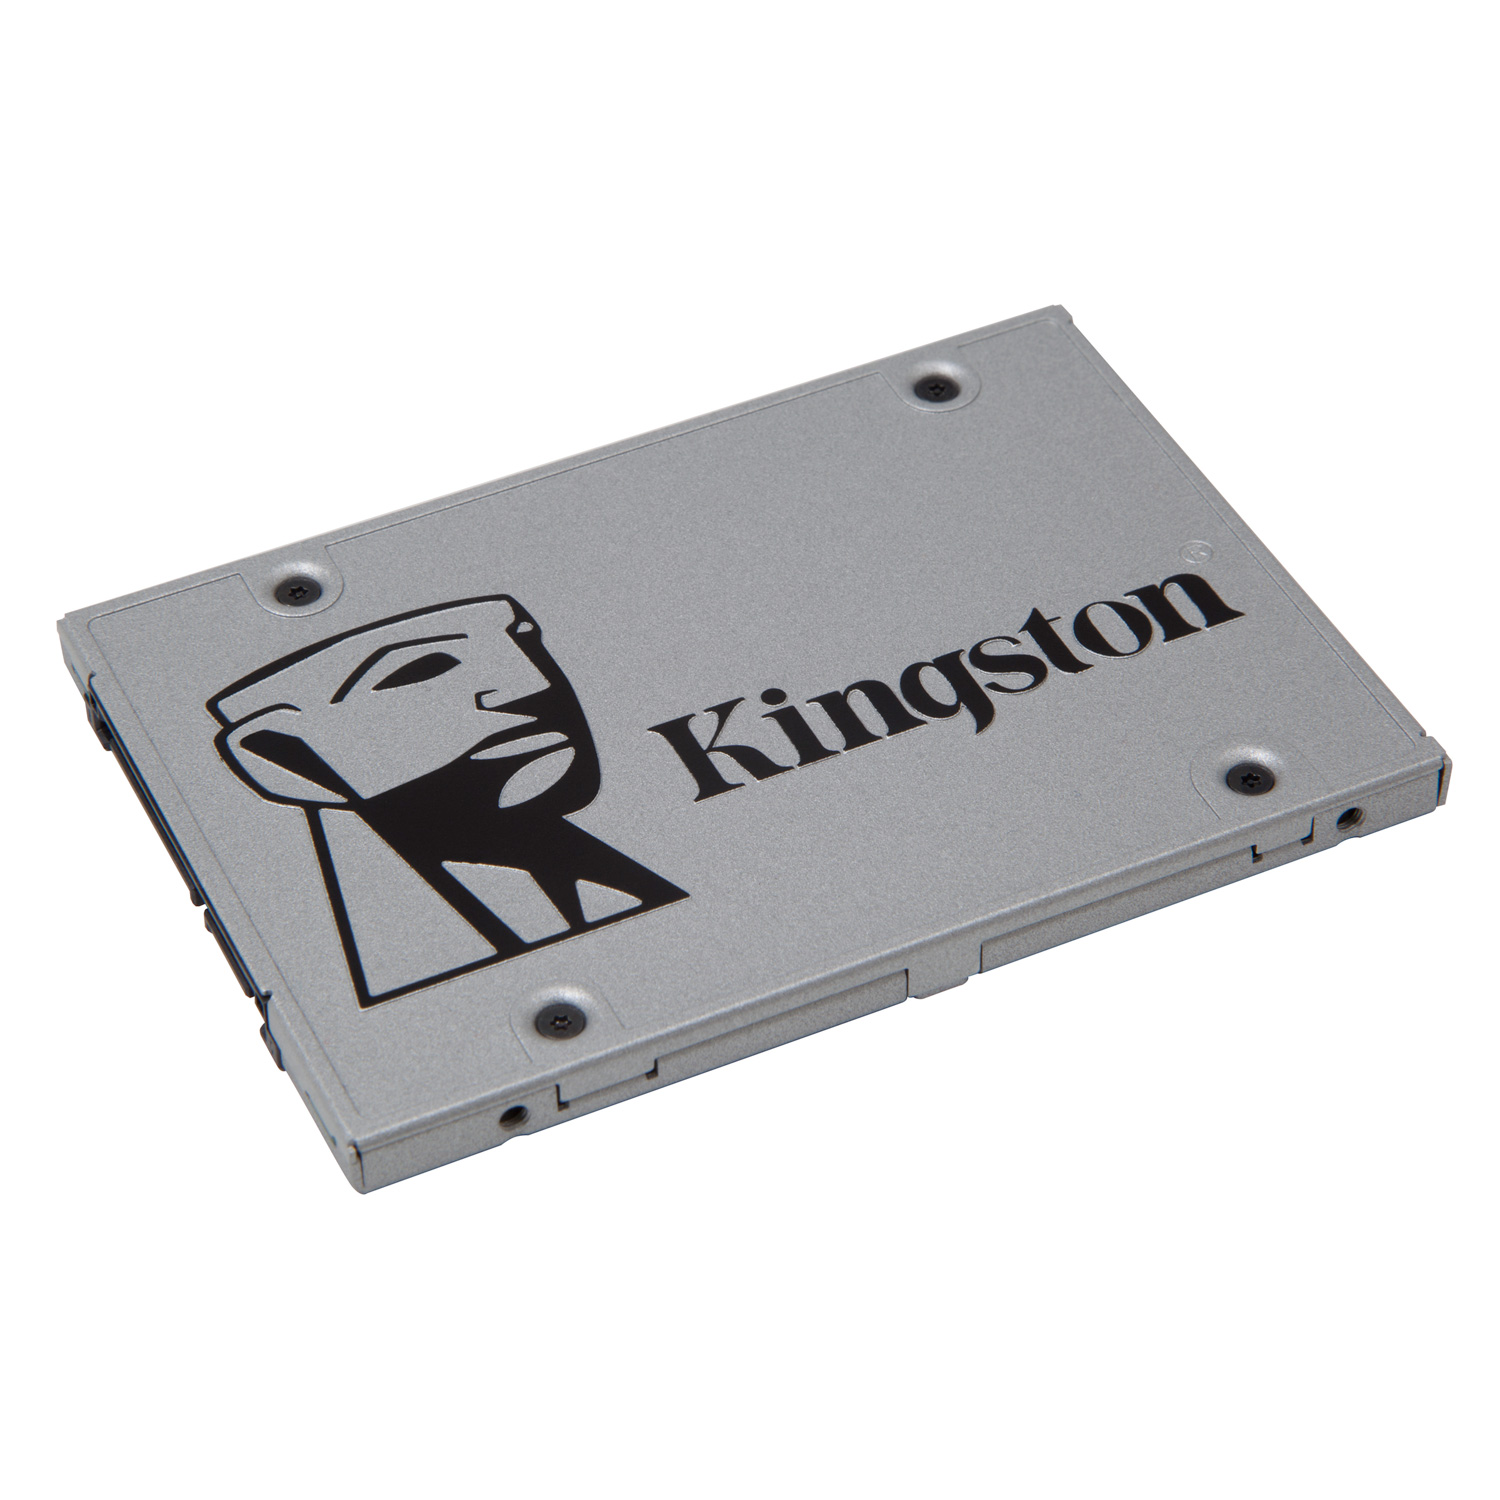 Disque dur SSD Kingston A400 240 Go 2.5 pouces 7mm Serial ATA 6Gb/s, Futur Runion informatique